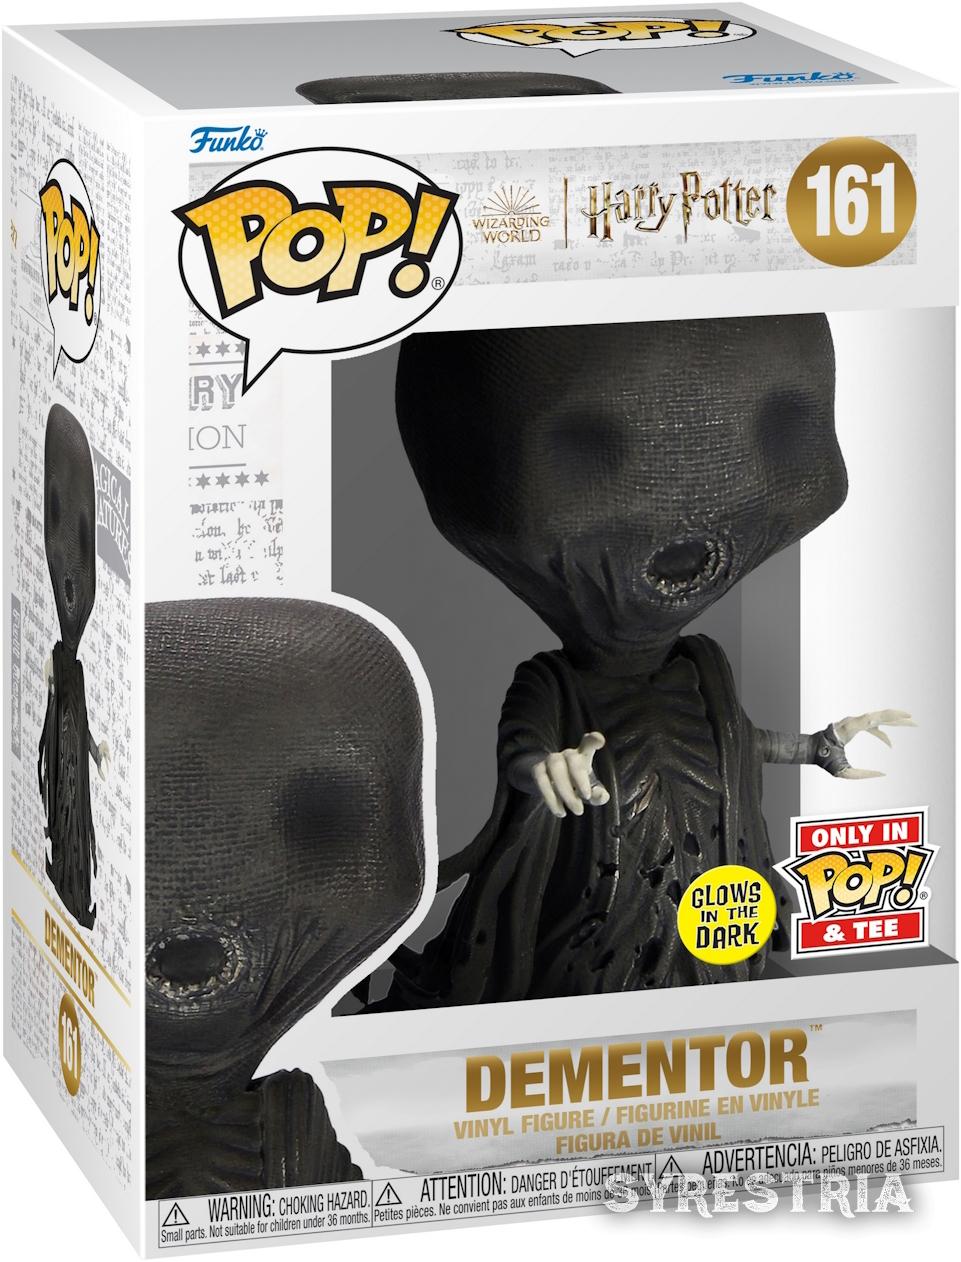 Harry Potter - Dementor 161 Only in Tee Glows - Funko Pop! Vinyl Figur